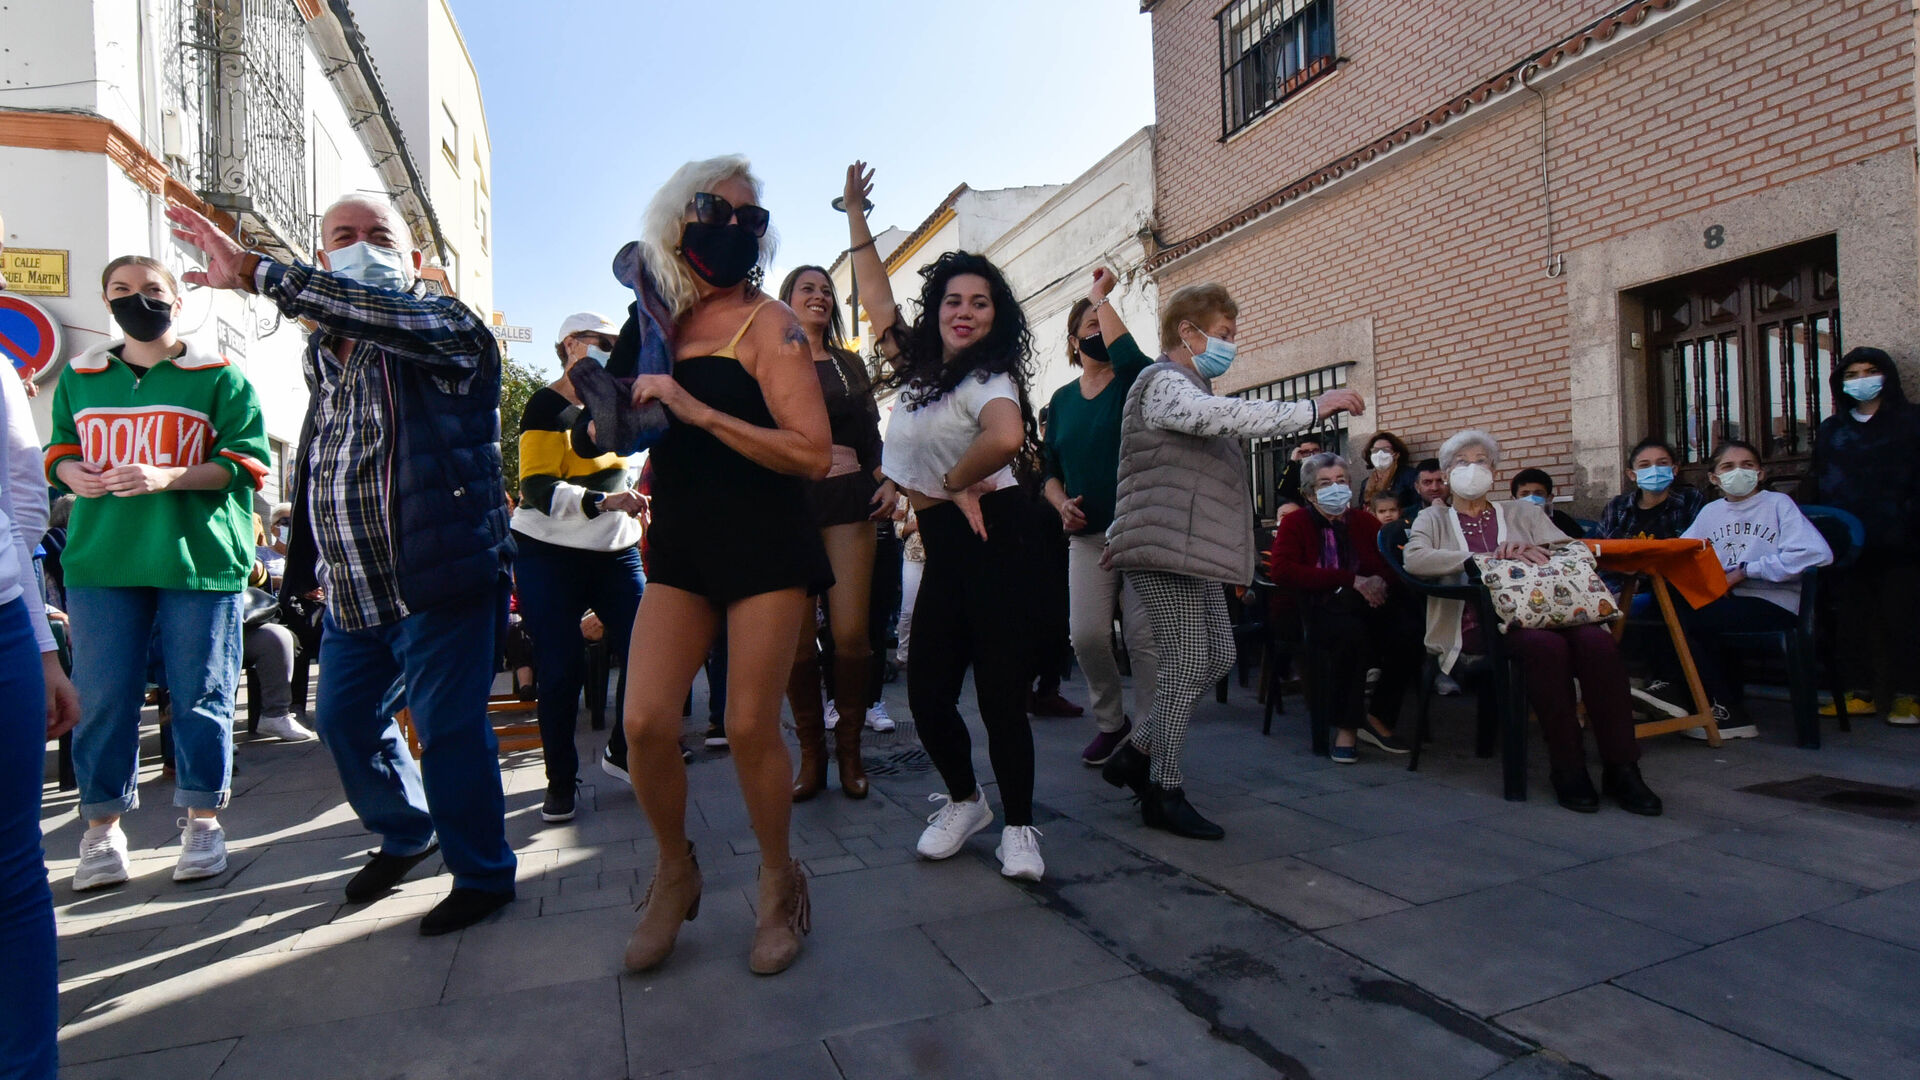 Convivencia de Un barrio de todos en Algeciras